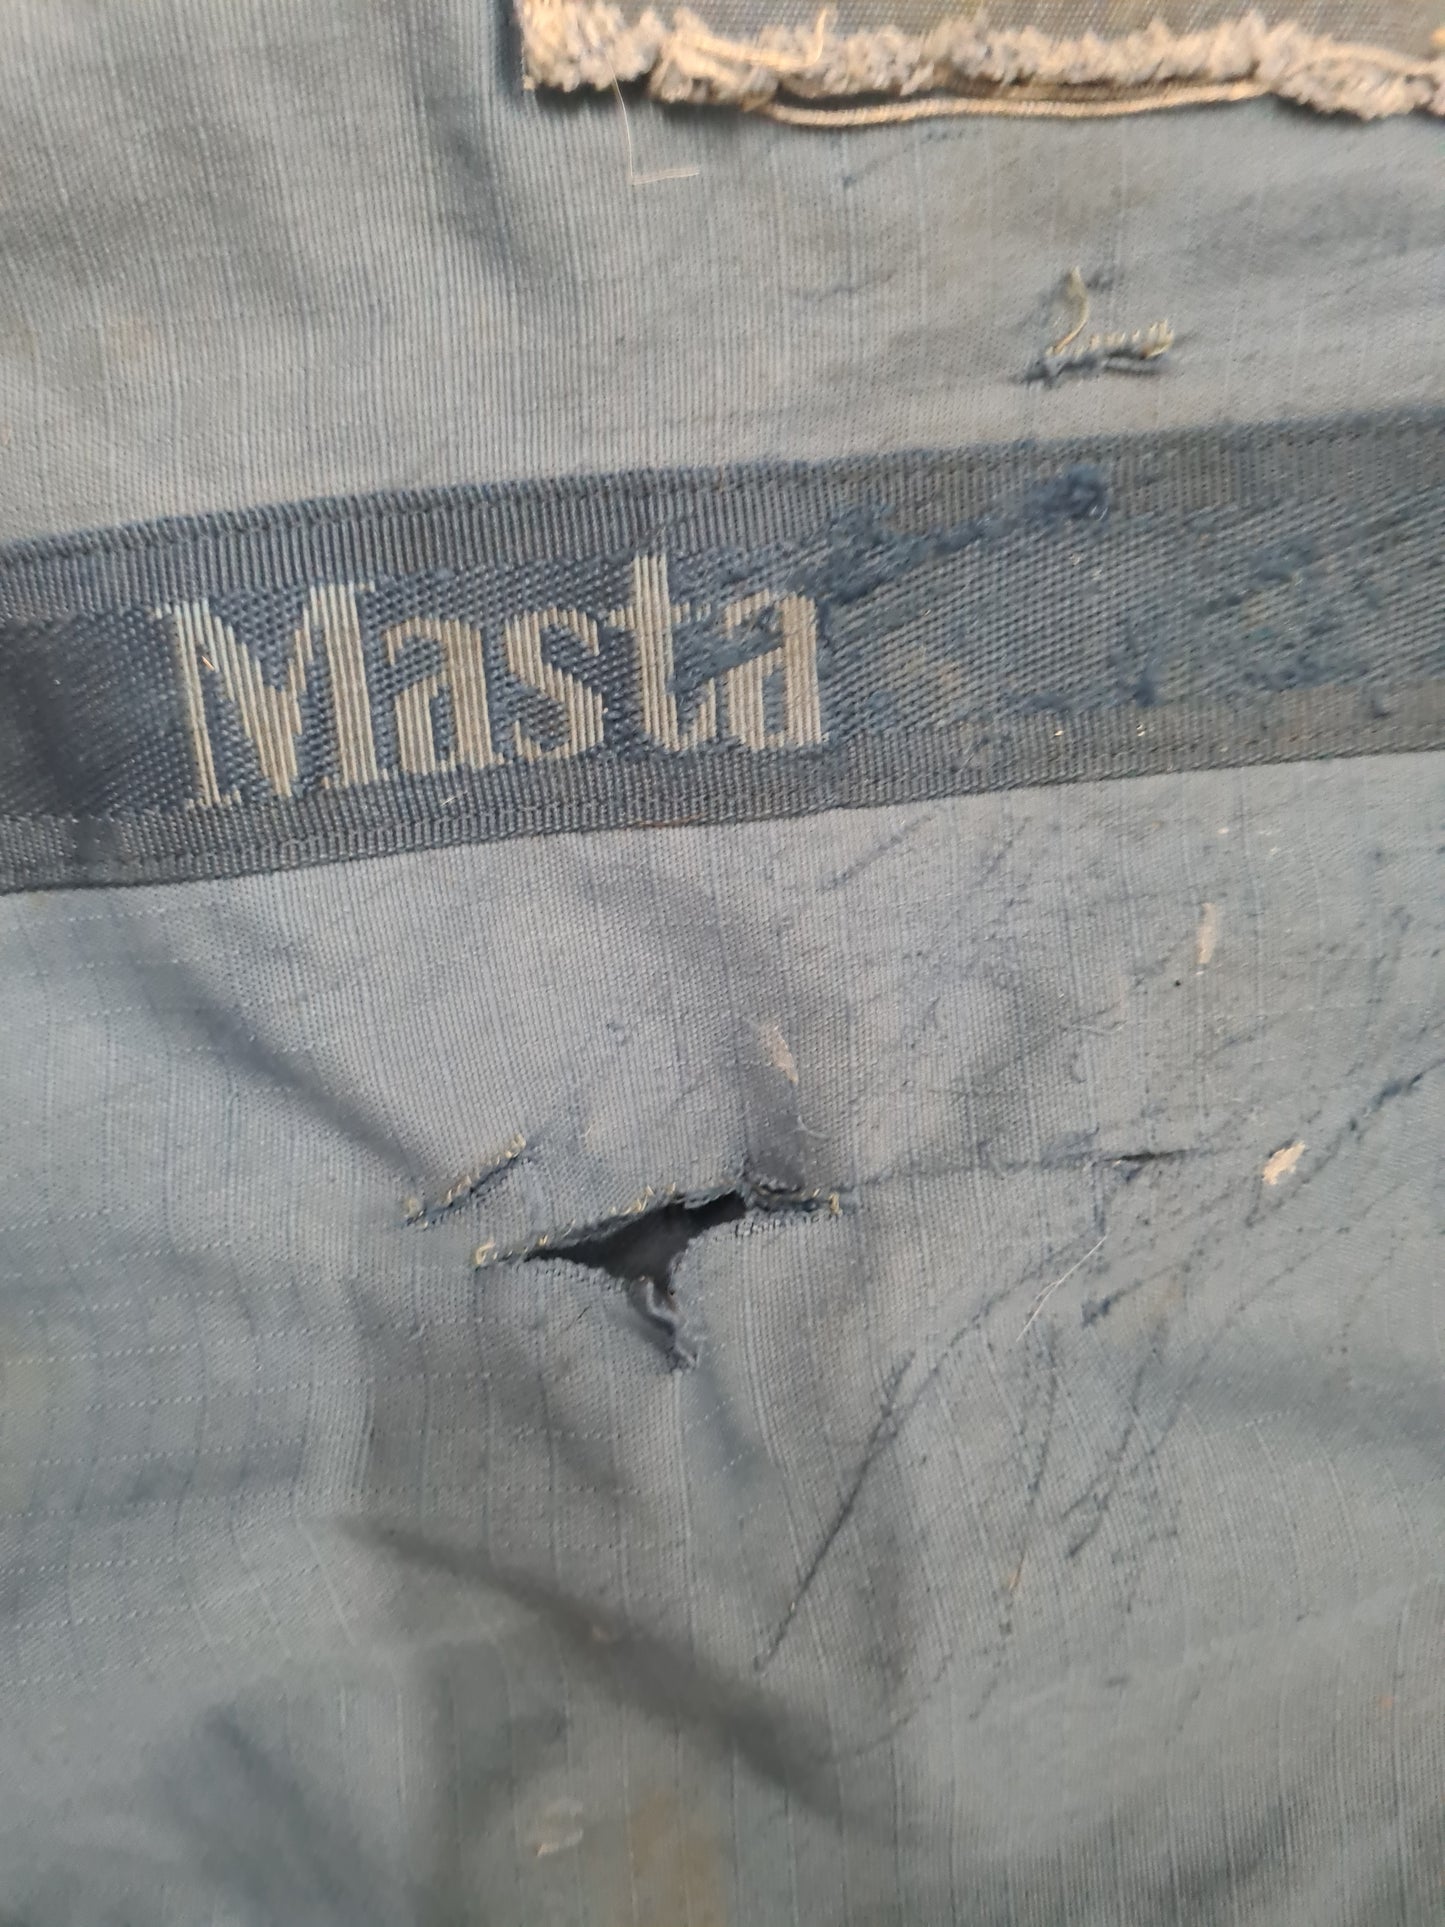 Masta blue MW stable rug 6'6" HW FREE POSTAGE 🟢